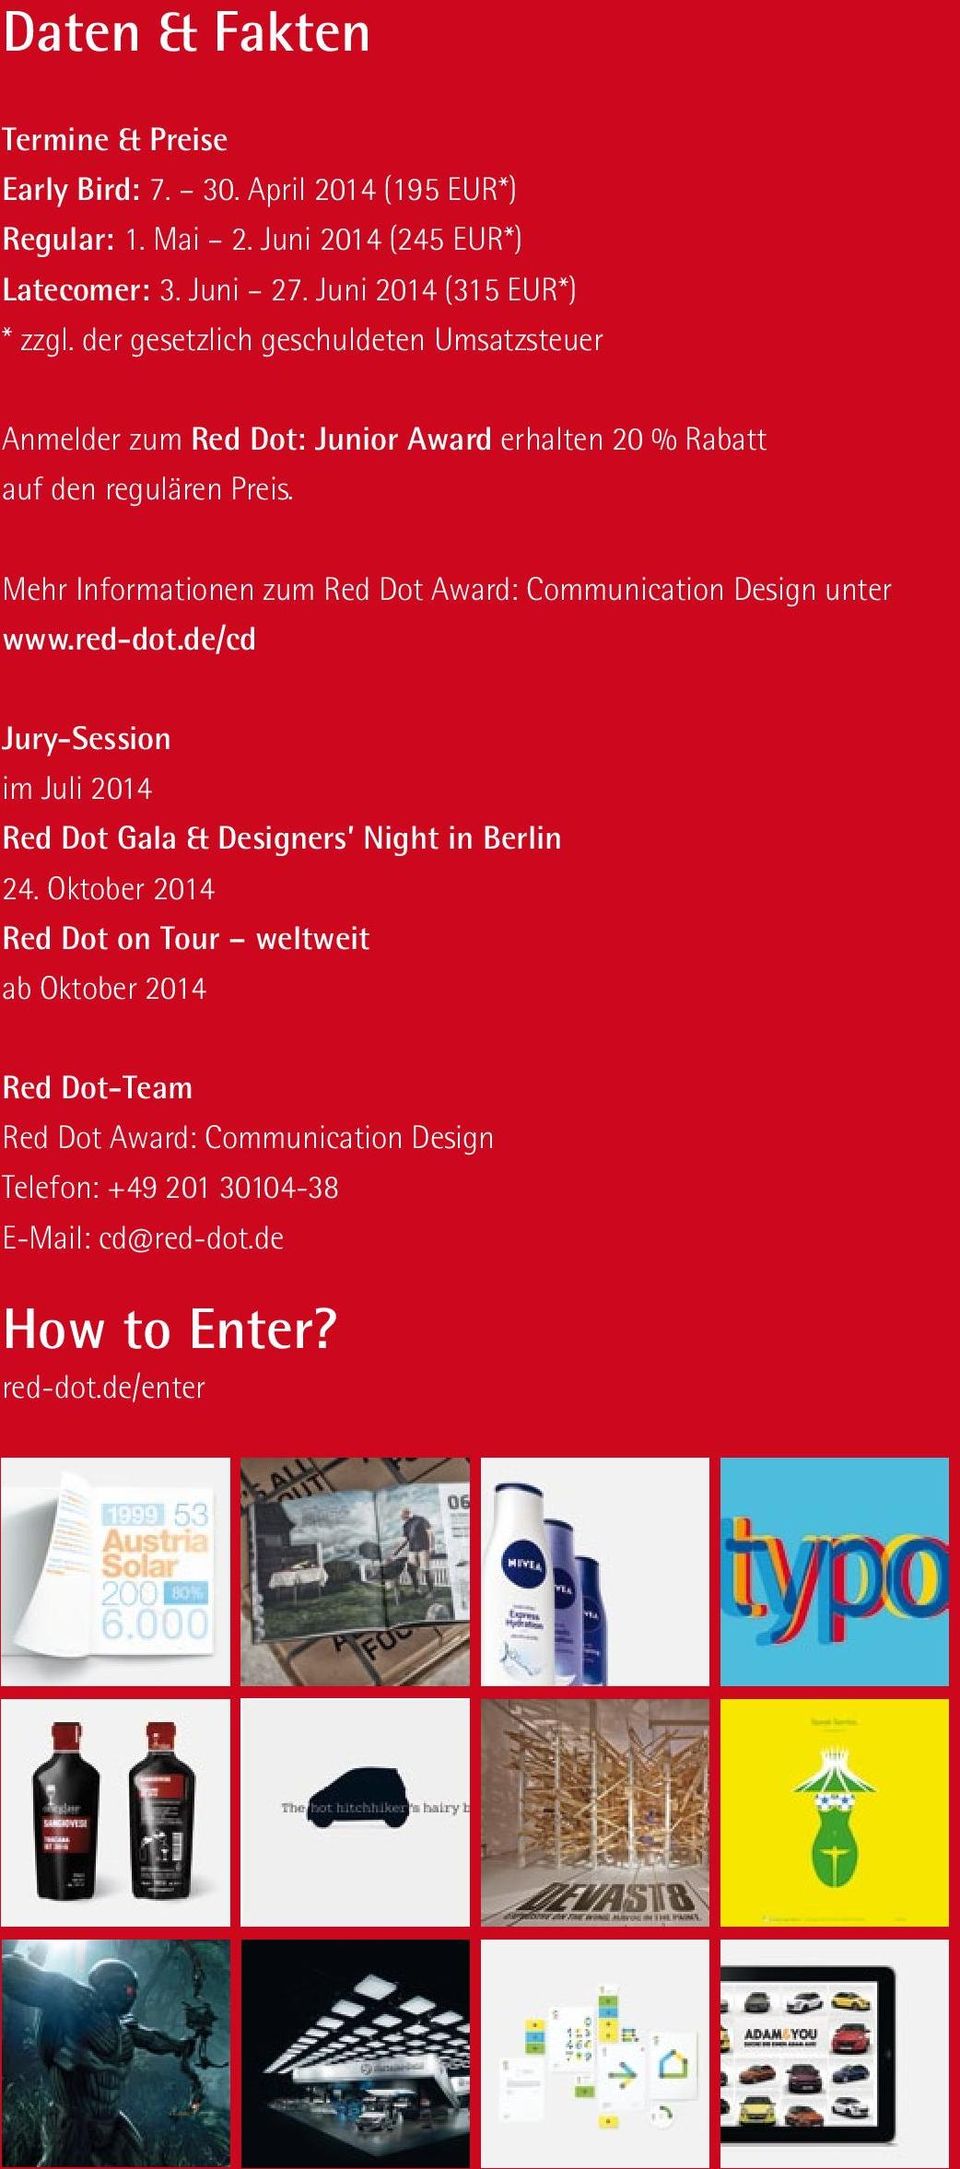 Mehr Informationen zum Red Dot Award: Communication Design unter www.red-dot.de/cd Jury-Session im Juli 2014 Red Dot Gala & Designers Night in Berlin 24.